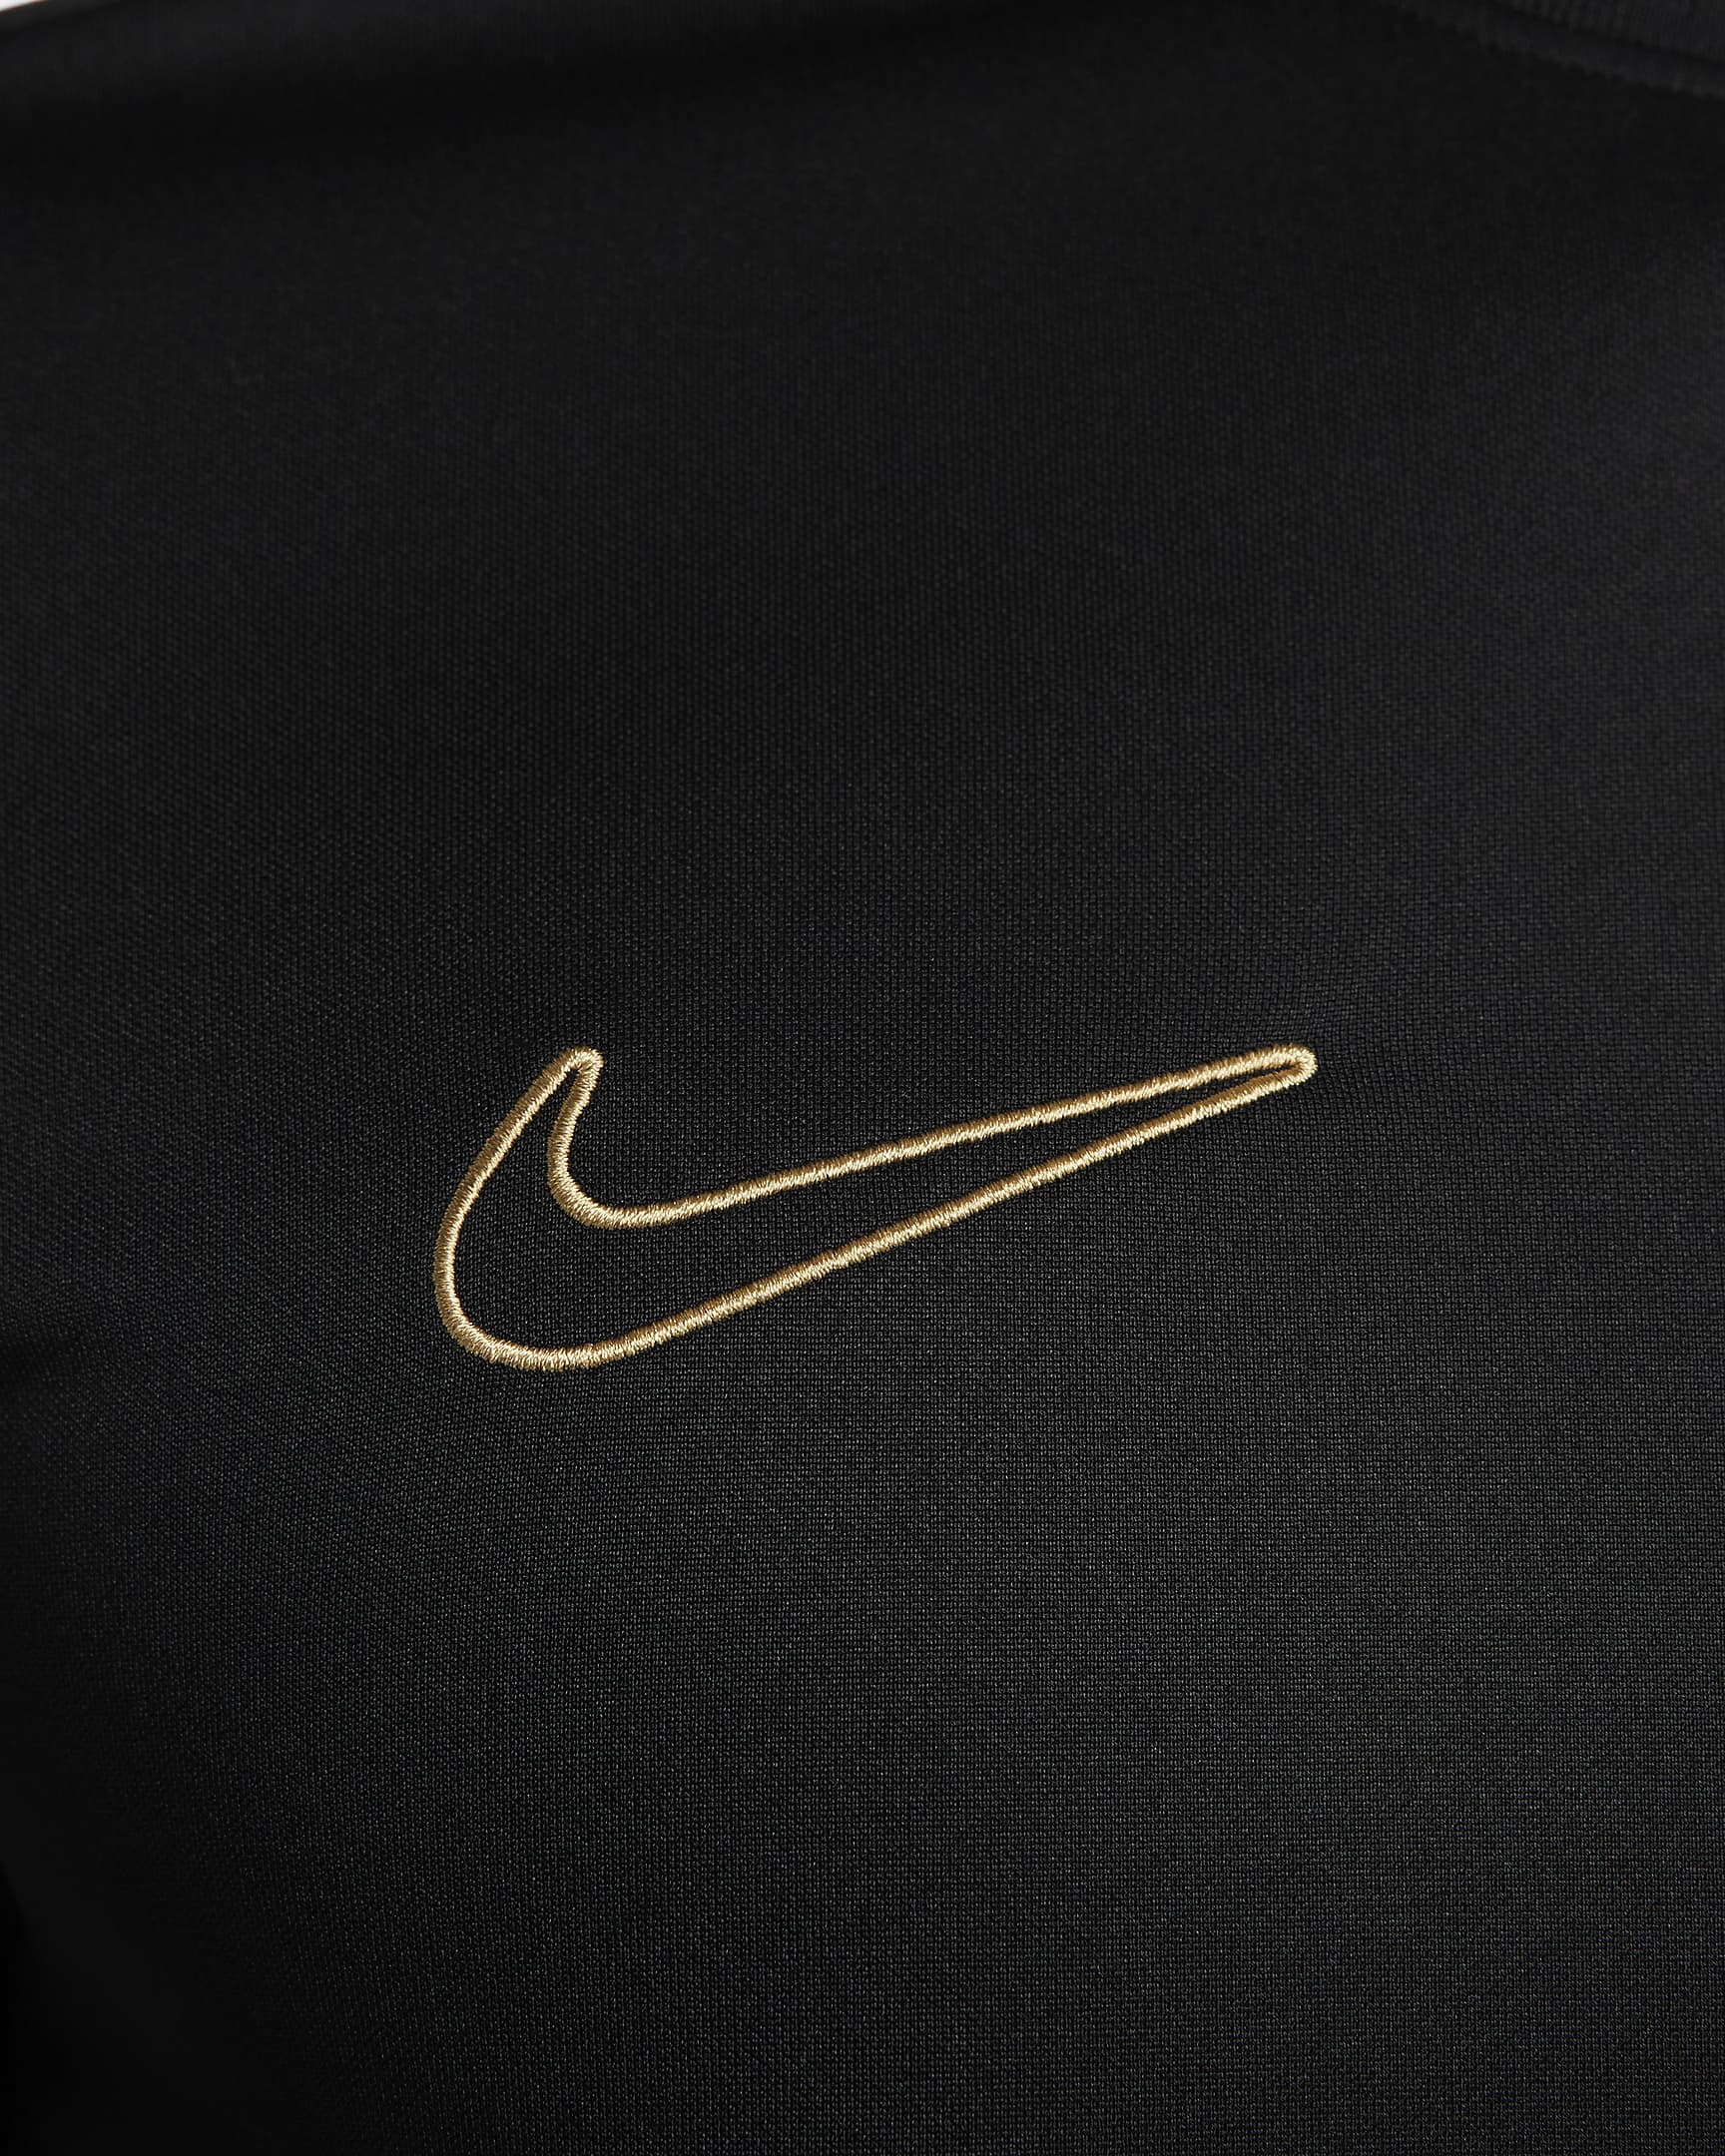 Nike Academy Men's Dri-FIT Short-Sleeve Football Top. Nike UK